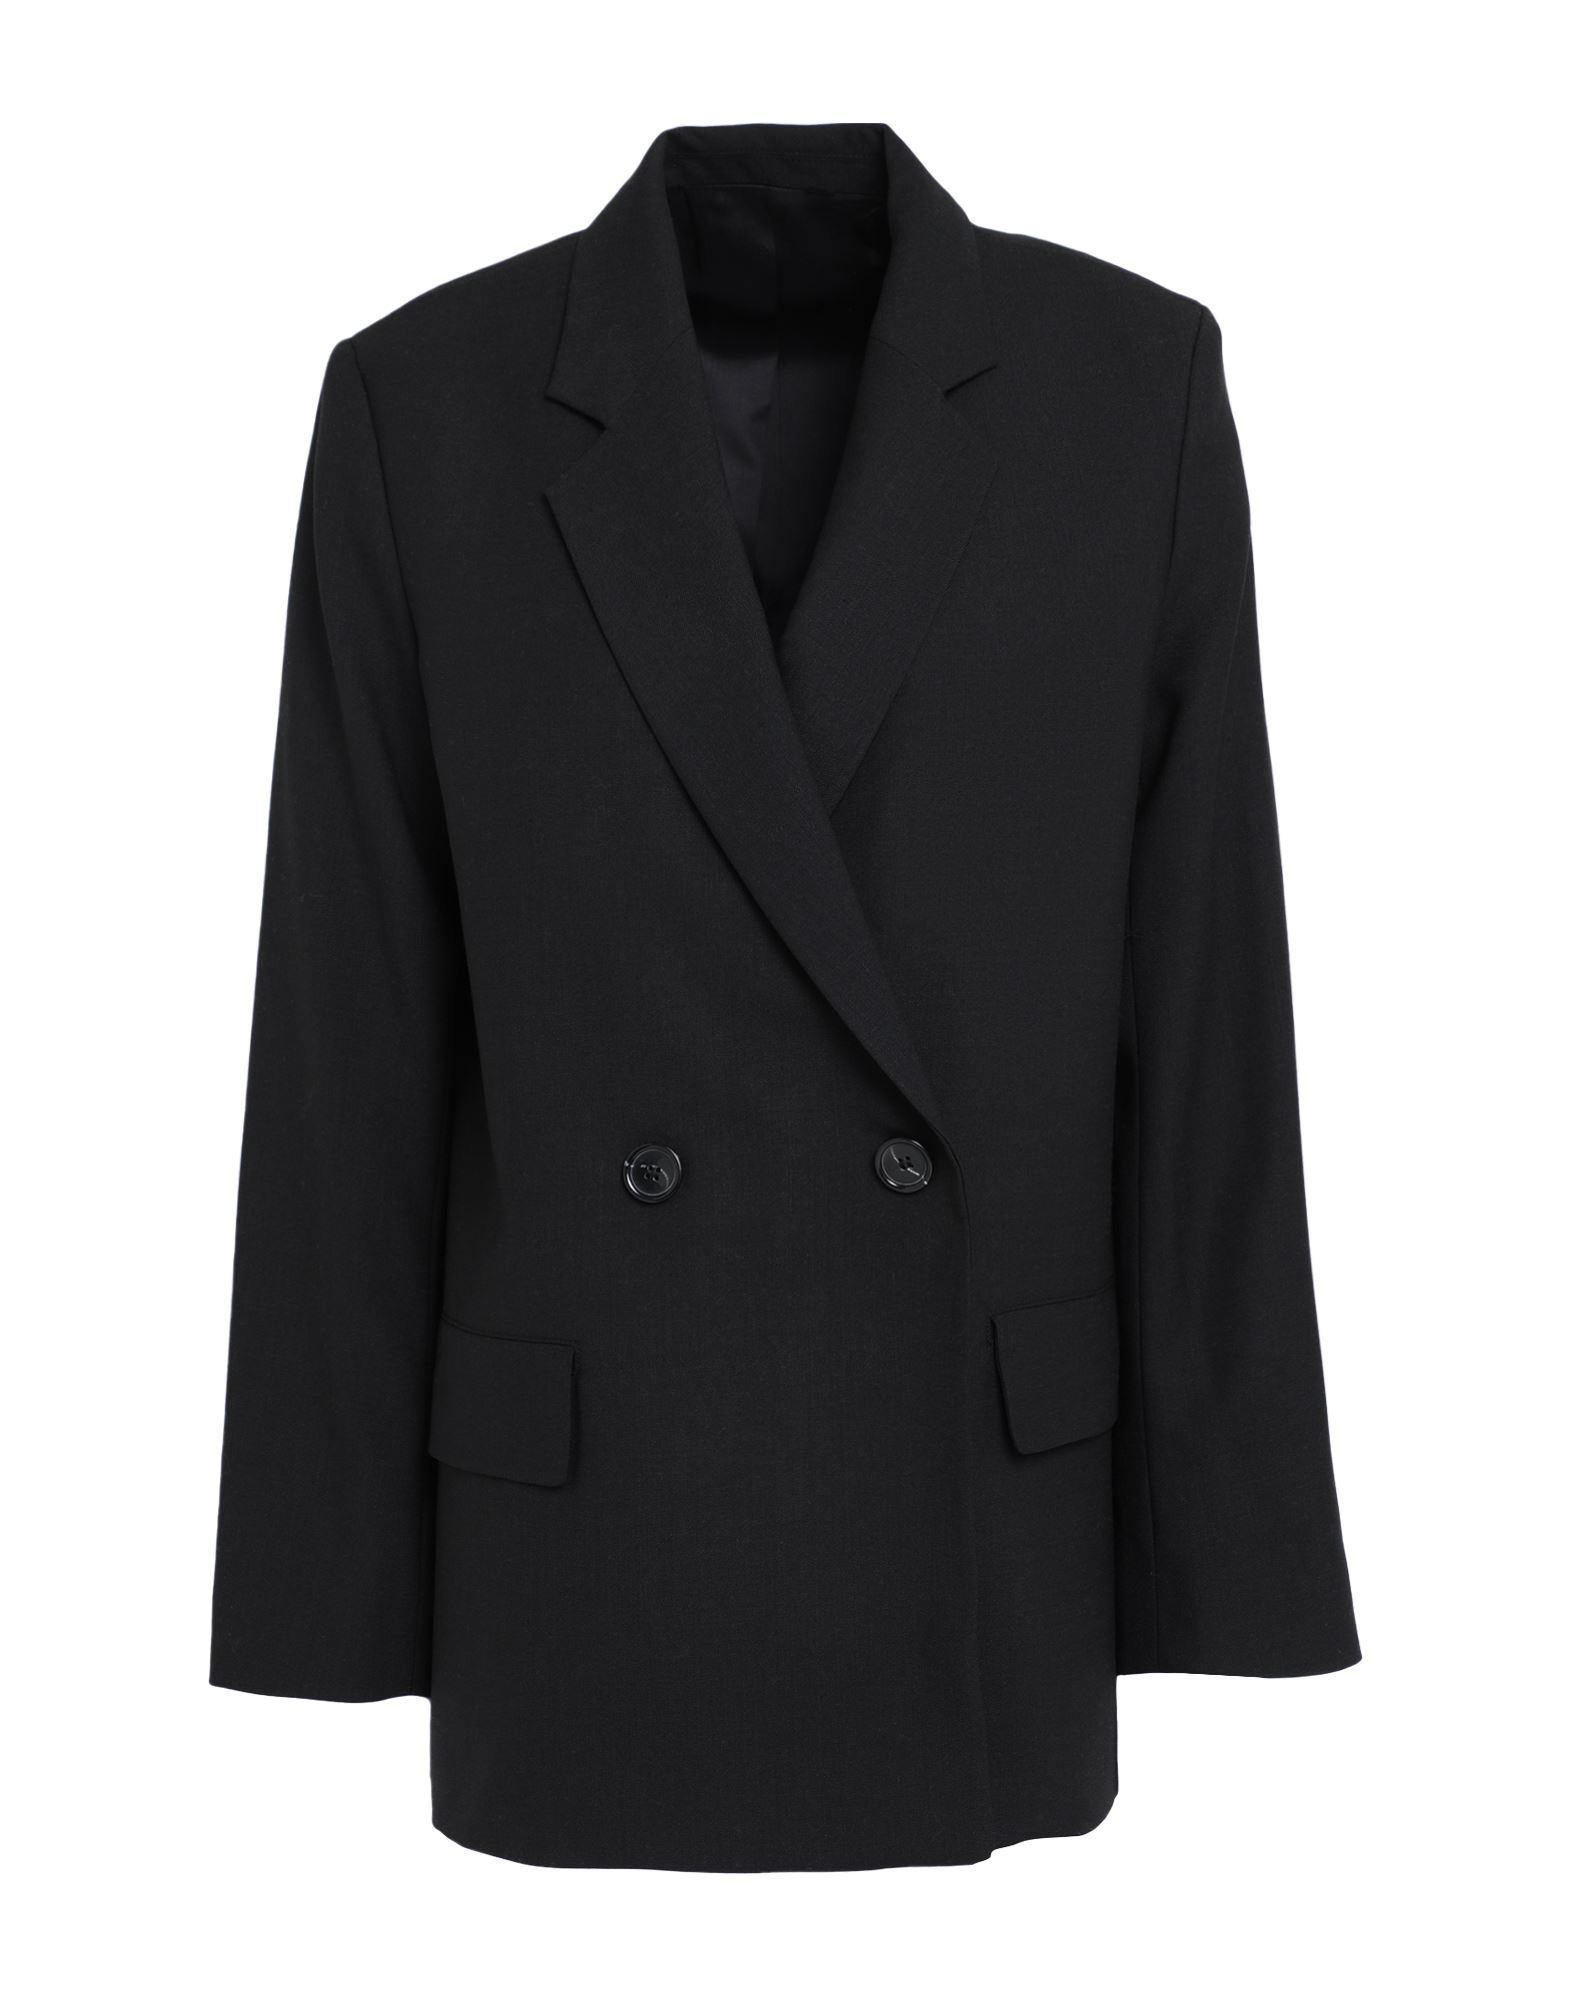 ARKET Suit Jacket in Black | Lyst